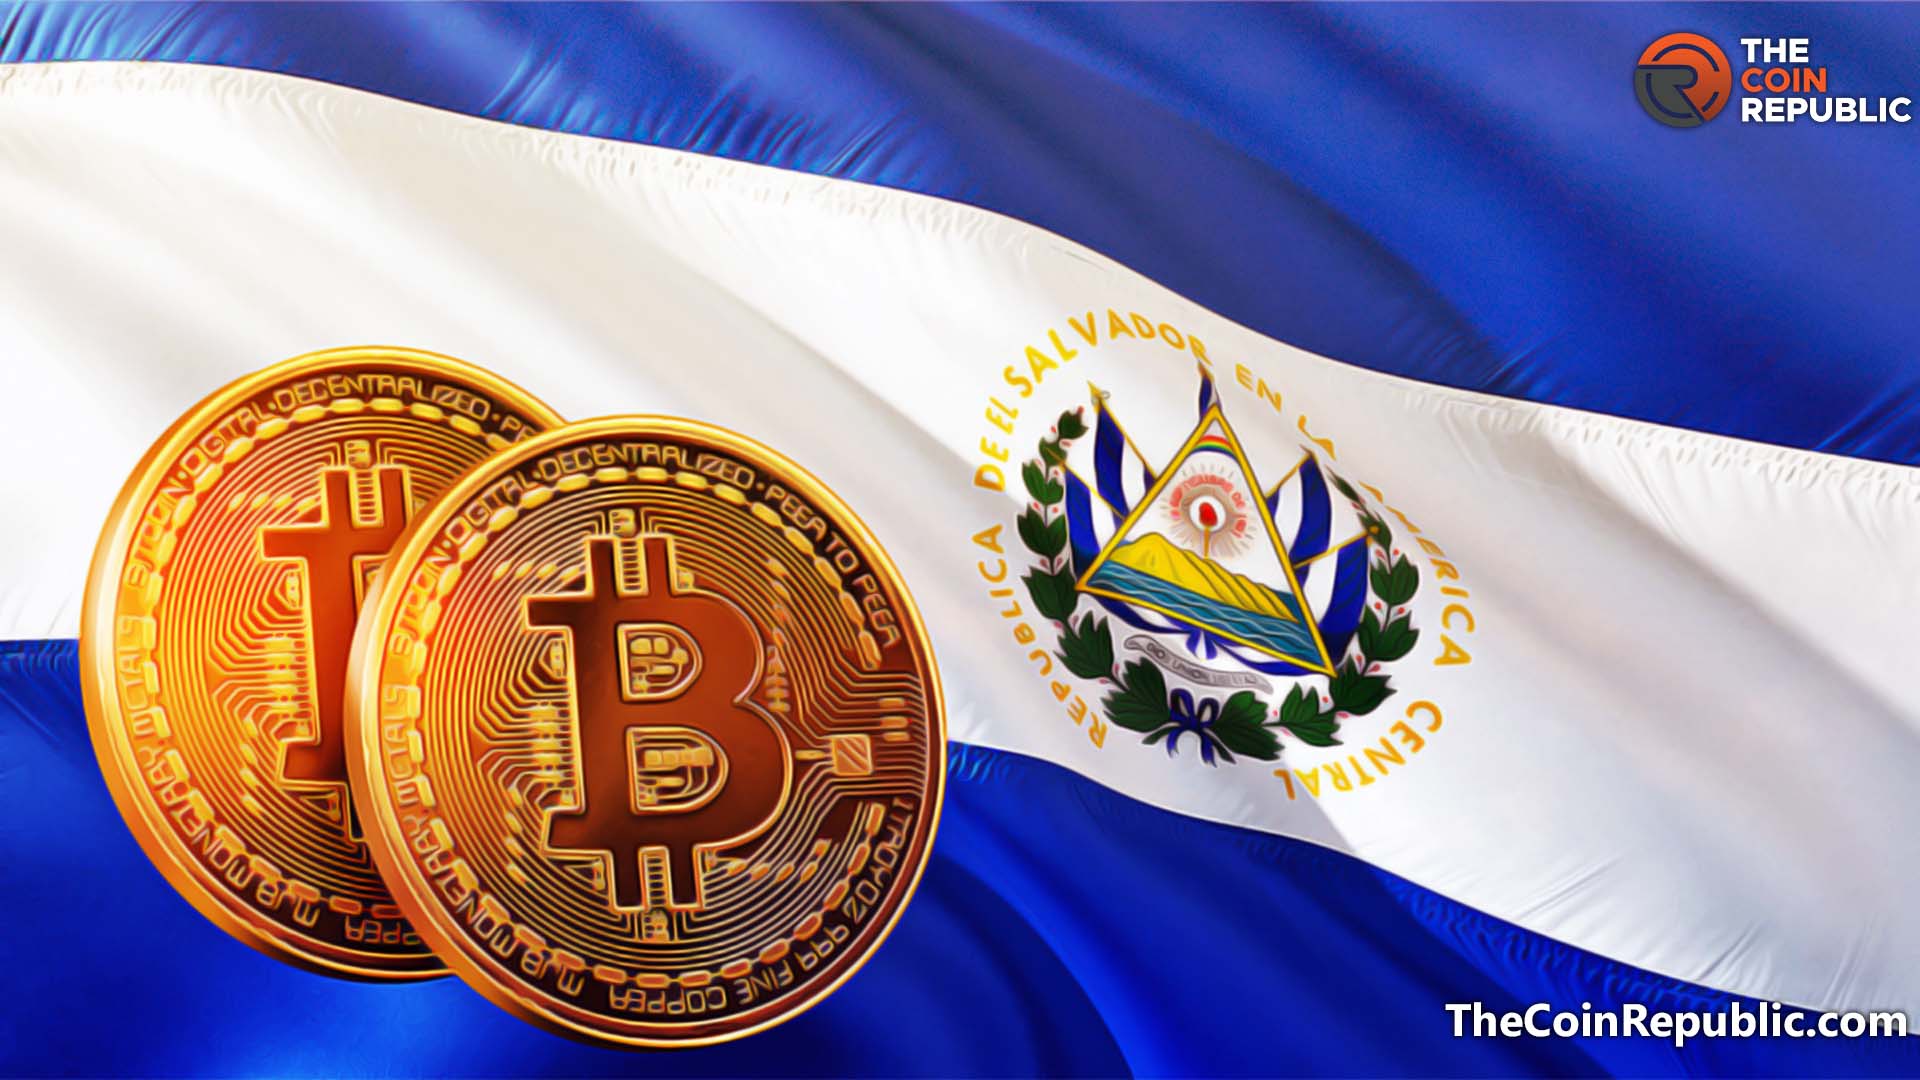 Digital Securities Bill seeking Bitcoin Bond gets approval in El Salvador